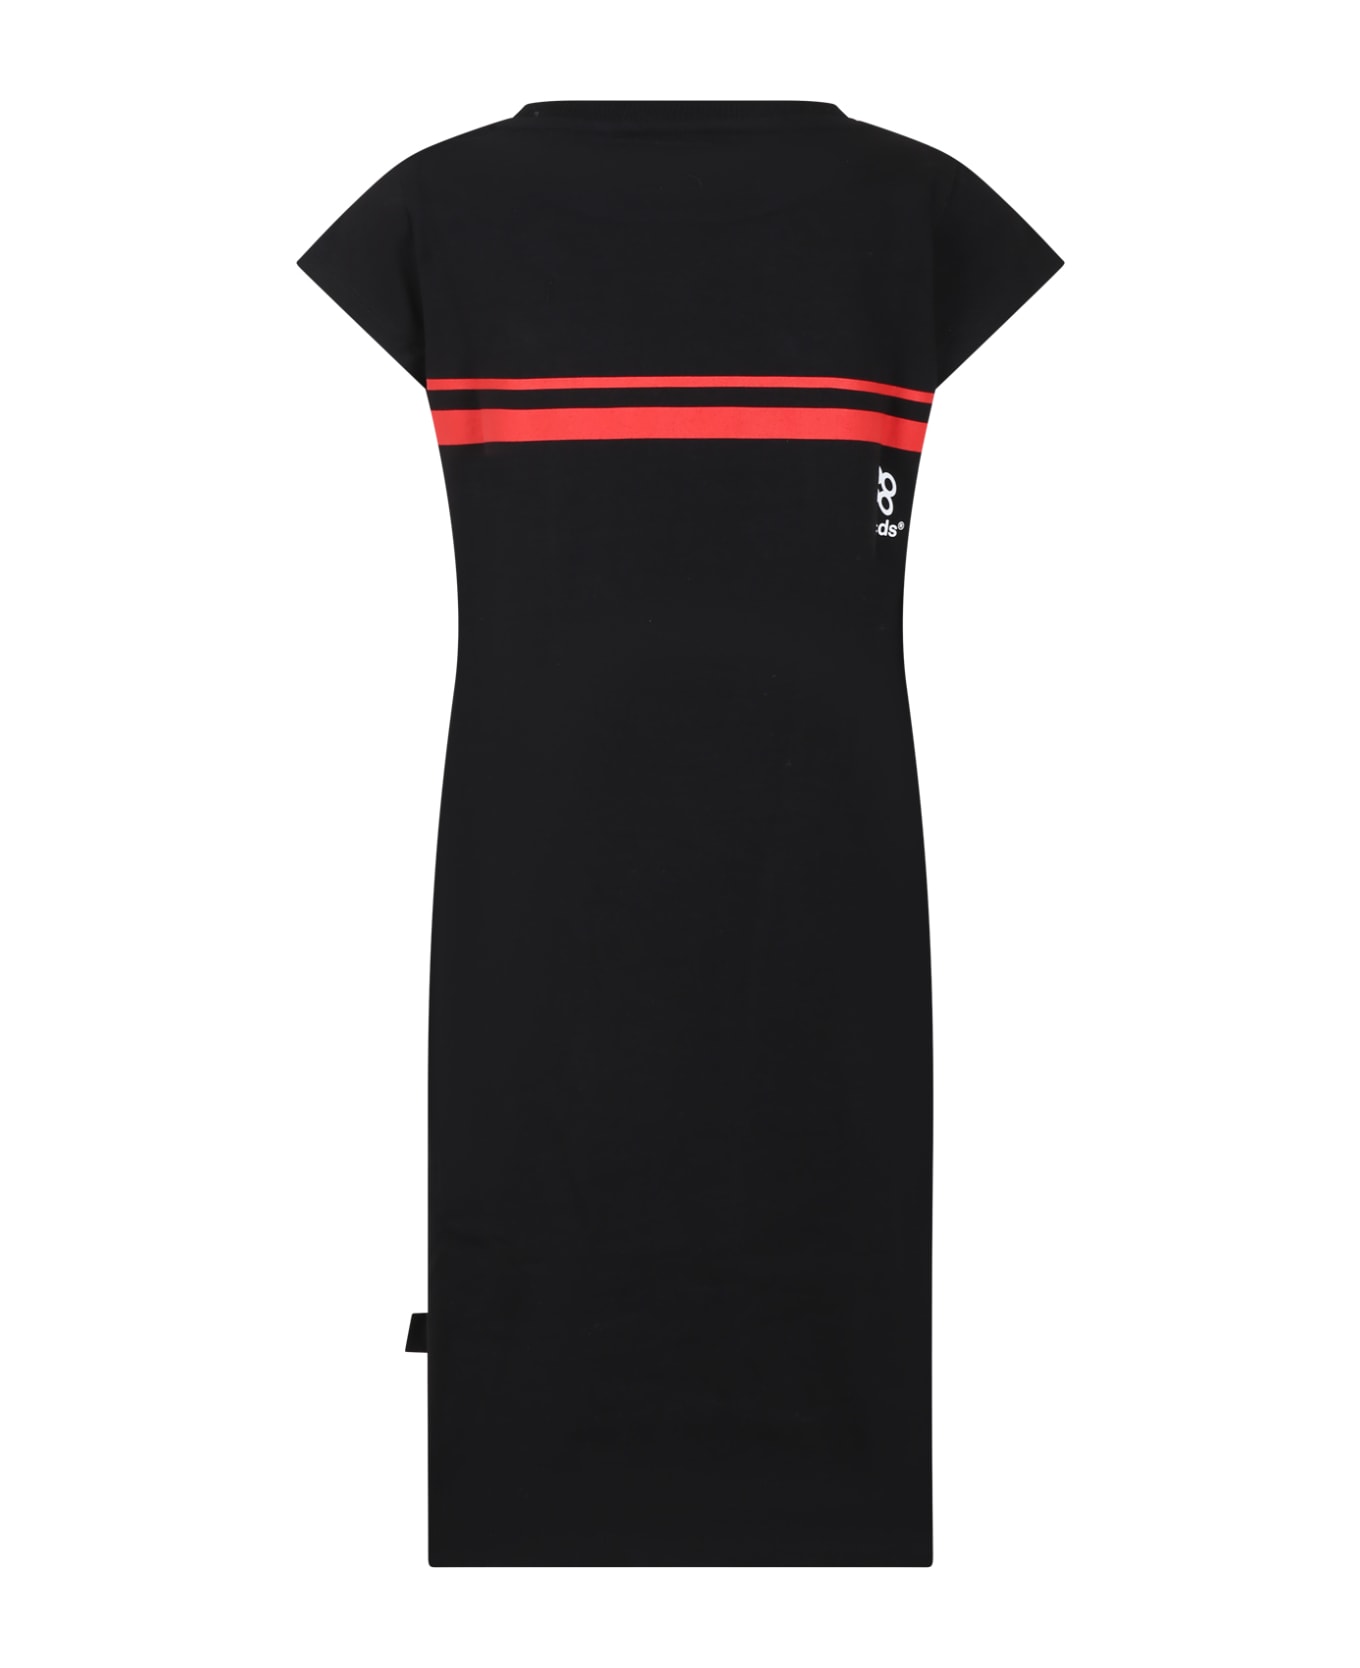 GCDS Mini Black Dress For Girl With Logo - Black